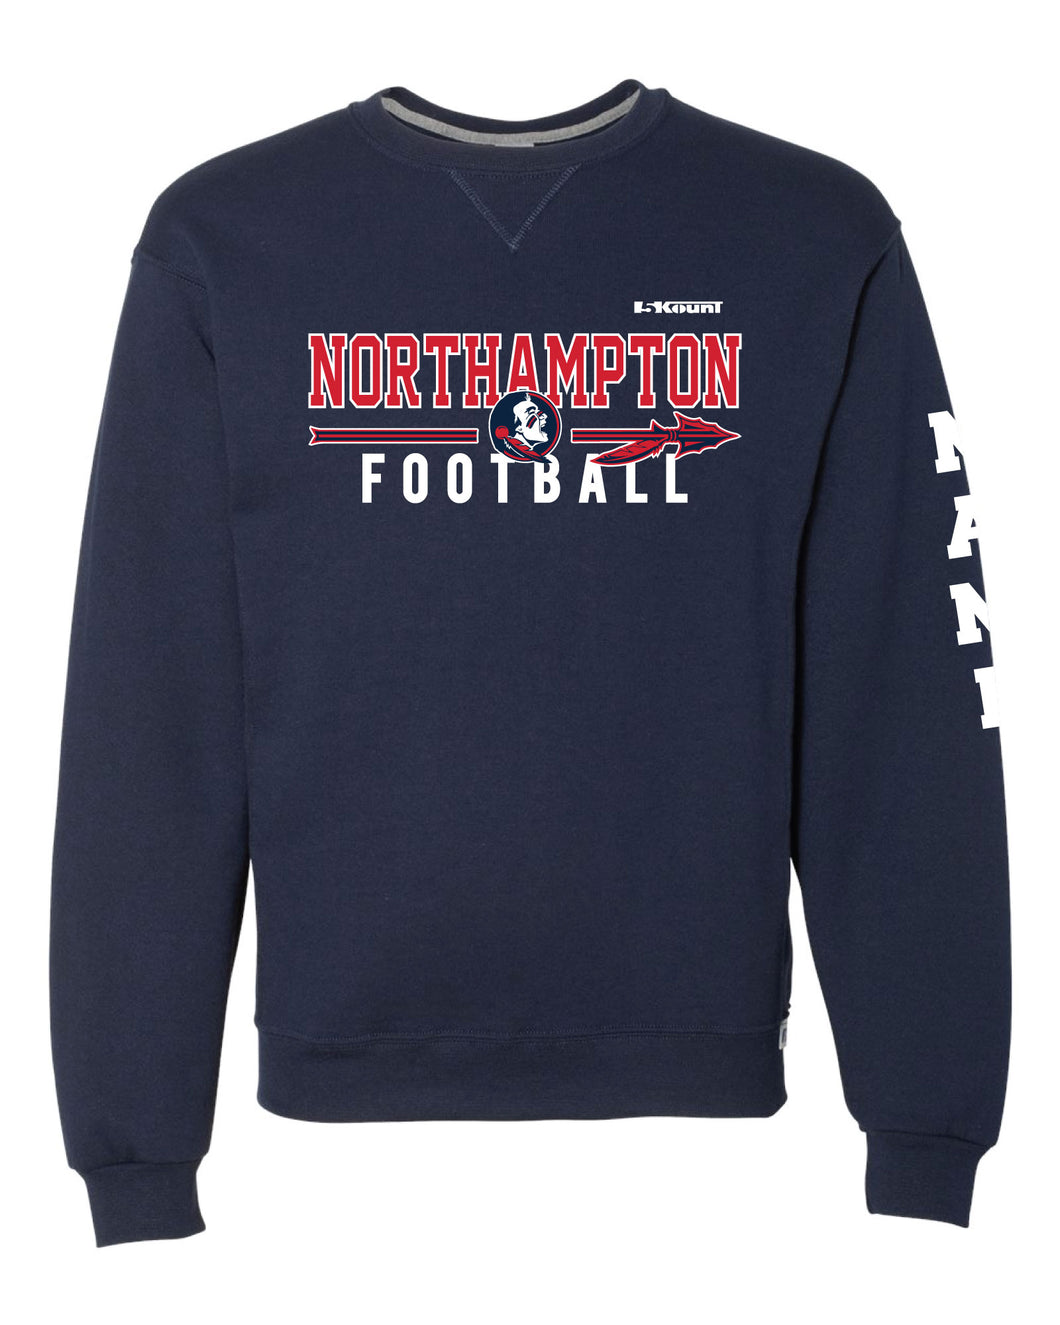 Northampton Indians Football Russell Athletic Cotton Crewneck Sweatshirt -  Navy